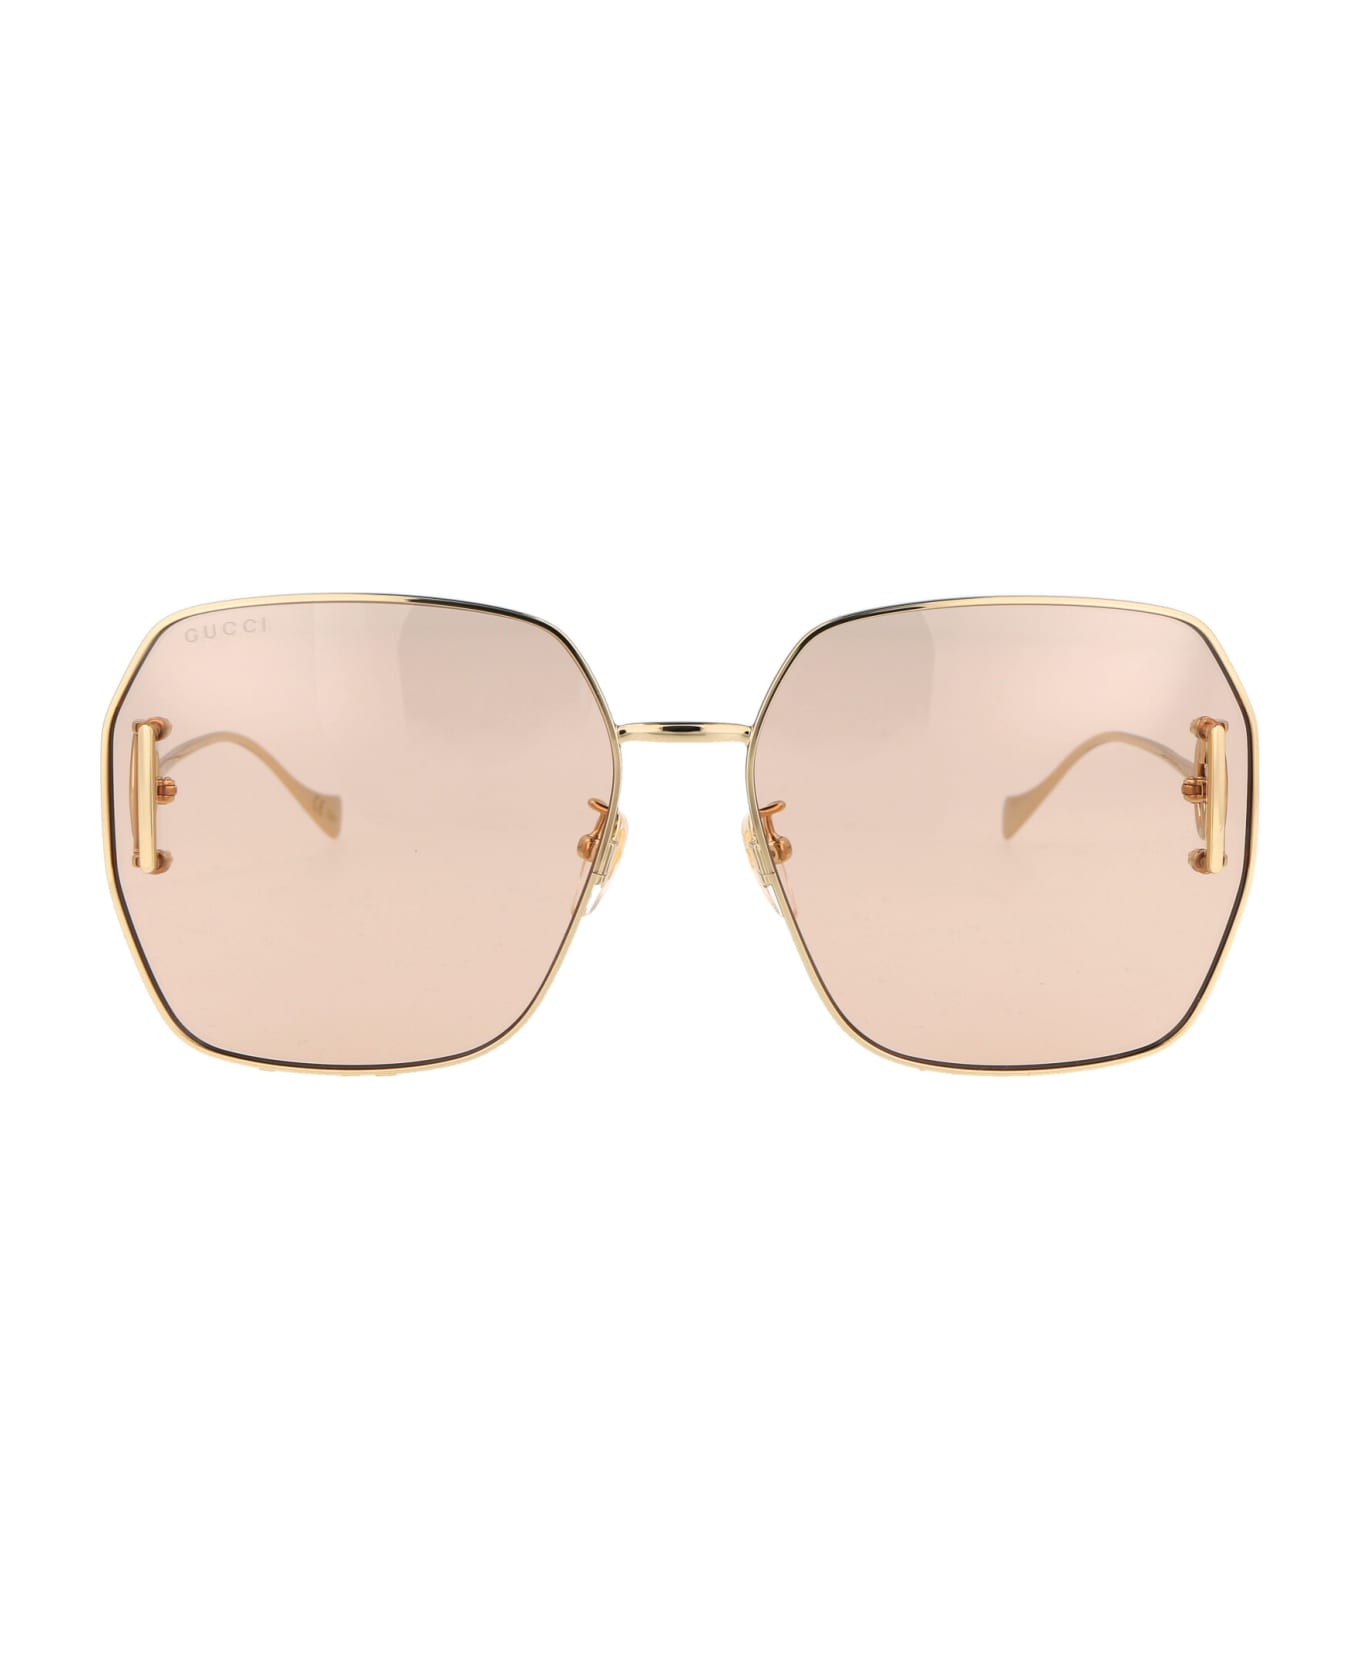 Gucci Eyewear Gg1207sa Sunglasses - 001 GOLD GOLD BROWN